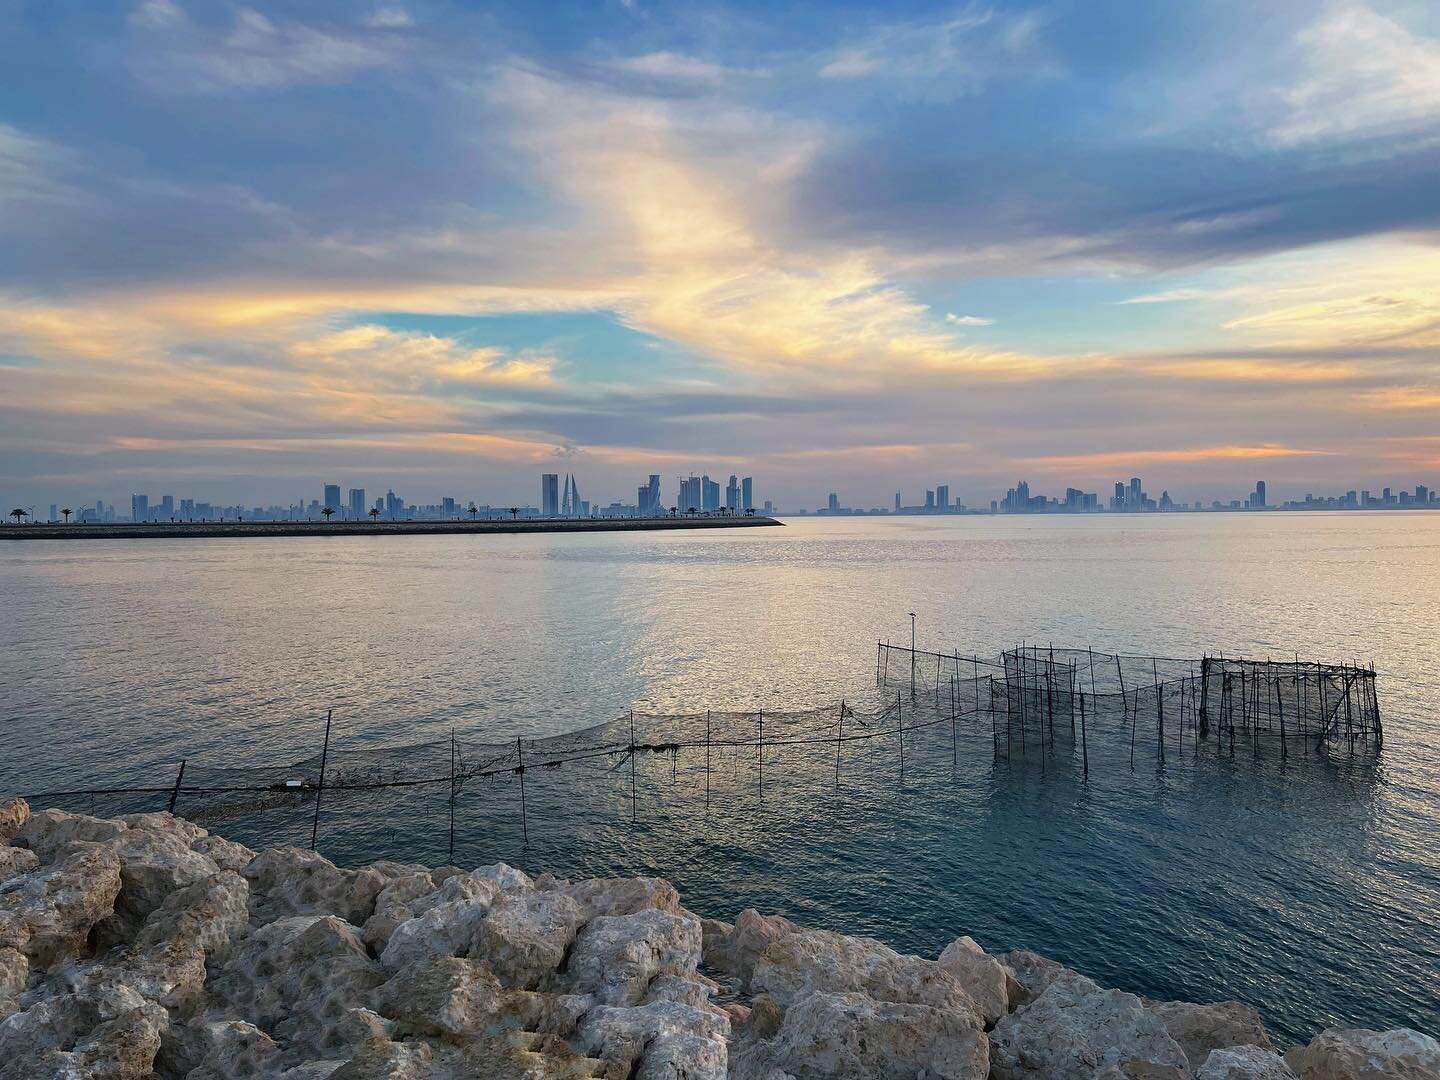 Have a great one #followers #bahrain #sunset #skyporn #sunsetsky #sunsetphotography #mobilephotography #mobilelegends #mobilephoto #المحرق_غير #البحرين🇧🇭 @bahrain.pic @localbh